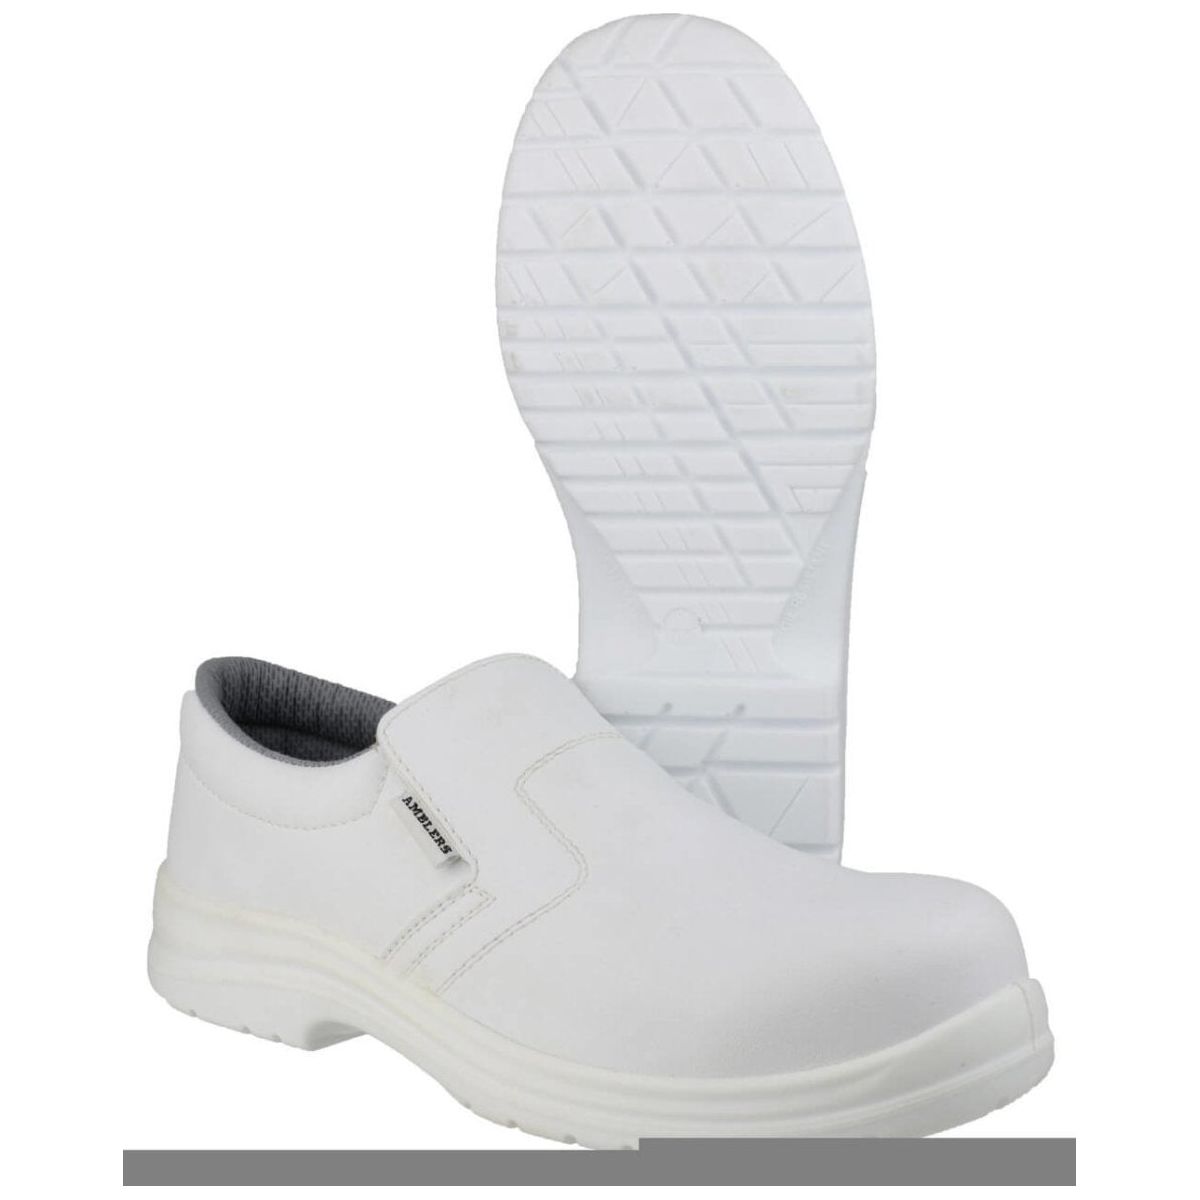 Amblers Fs510 Slip-On Safety Shoes Womens - workweargurus.com